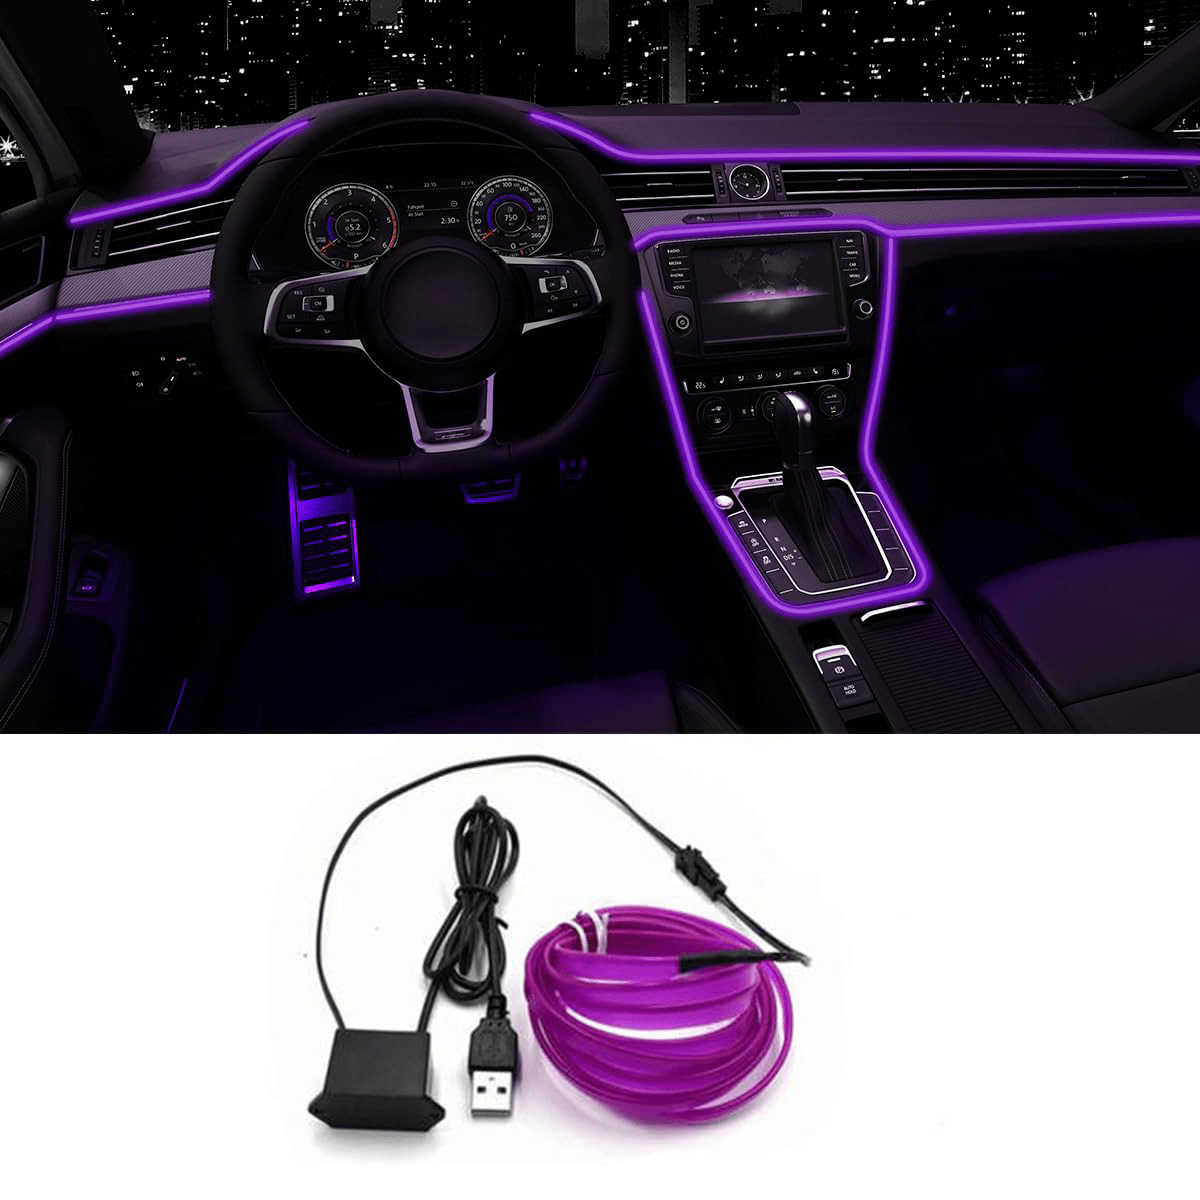 

5m Car Led Strip - Usb Powered, Bendable, Cuttable, High Brightness, Purple